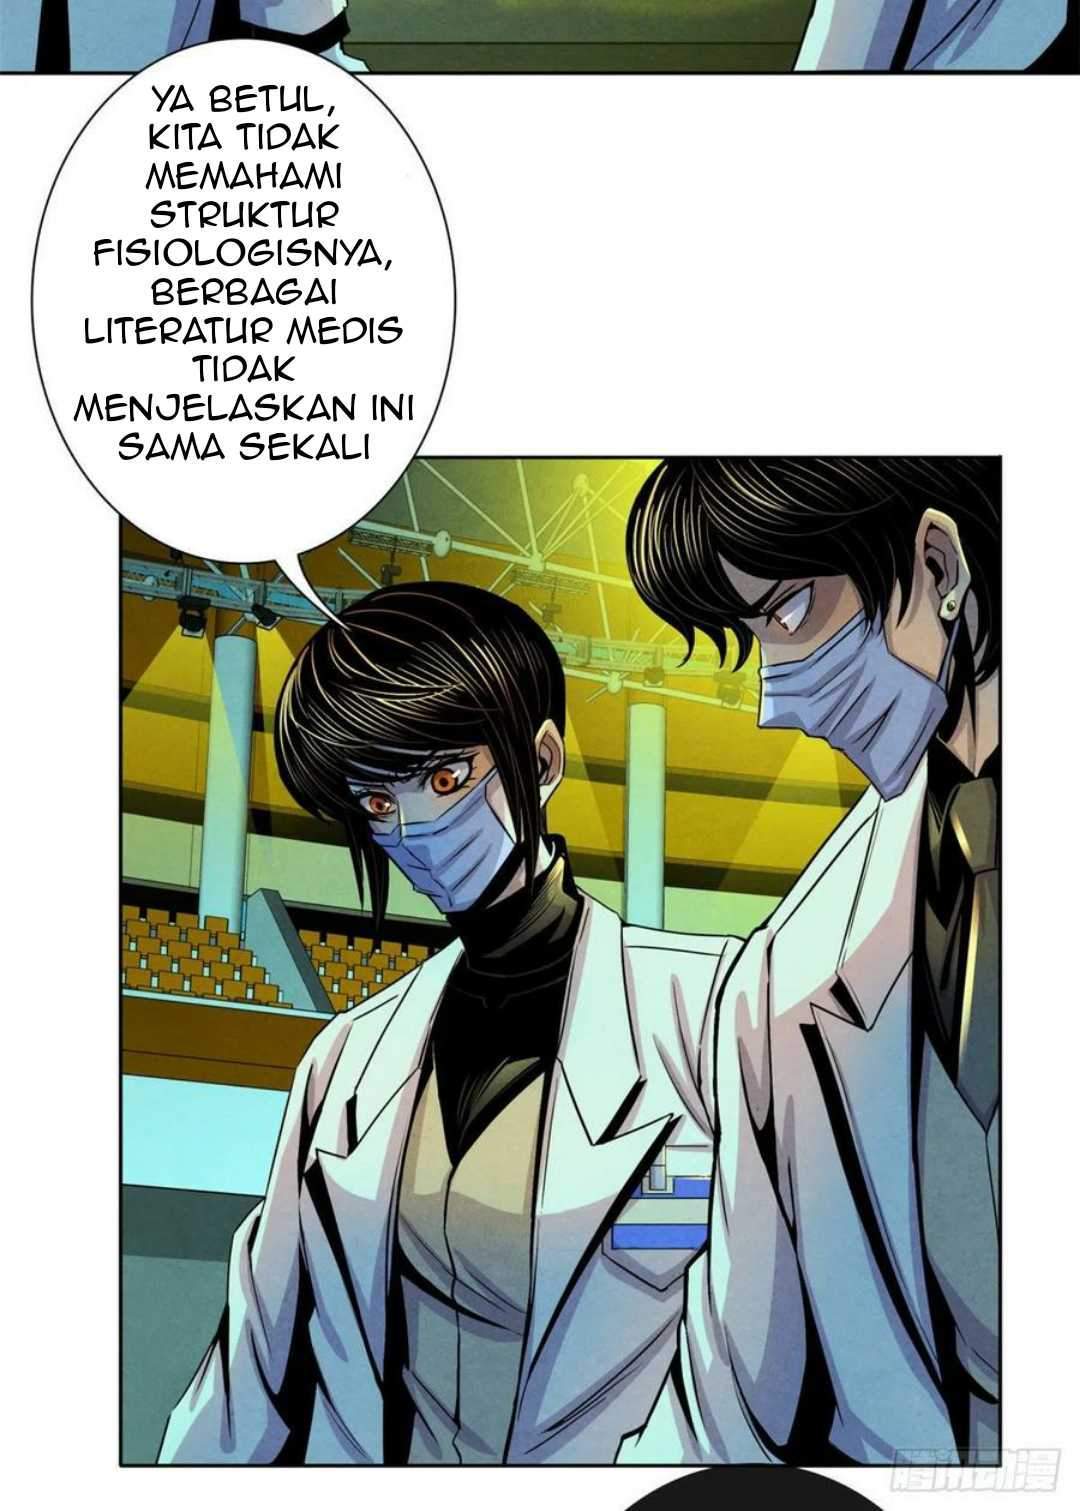 Doctor Li Ming Chapter 21